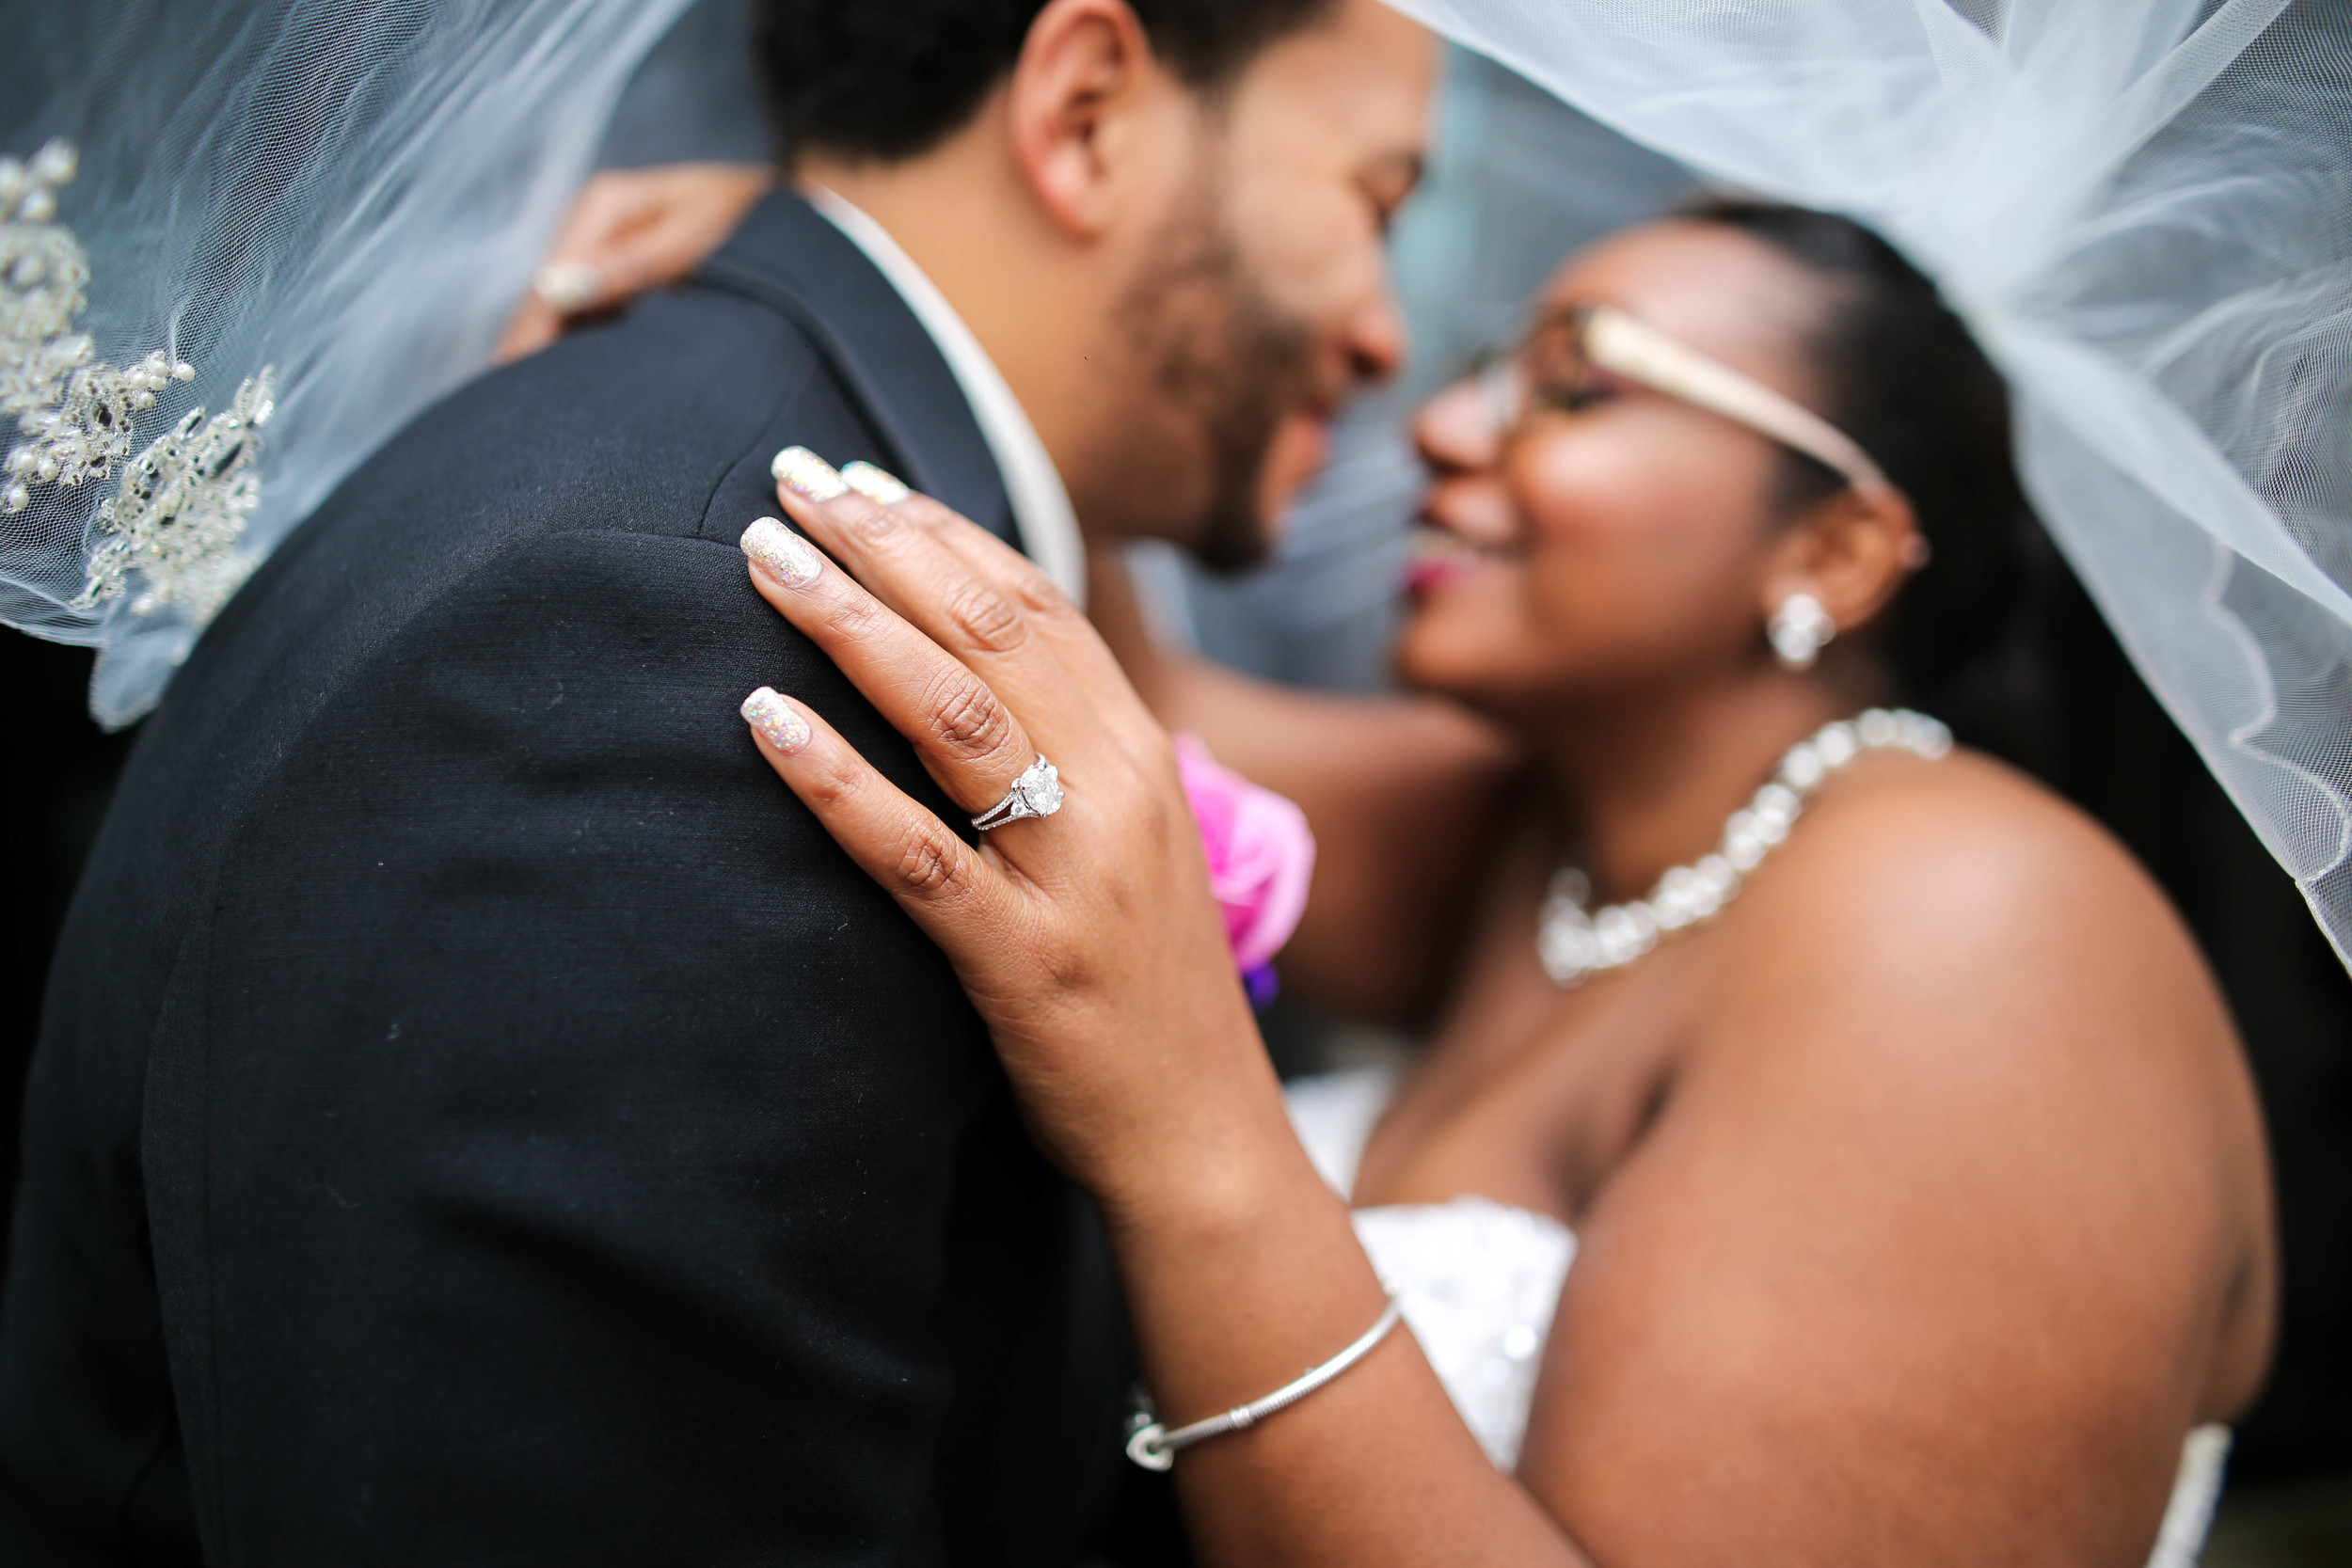  Wedding Wednesday Blog Post on Why We Love Veils. &nbsp;LGBT Friendly Philadelphia Photographer Swiger Photography 